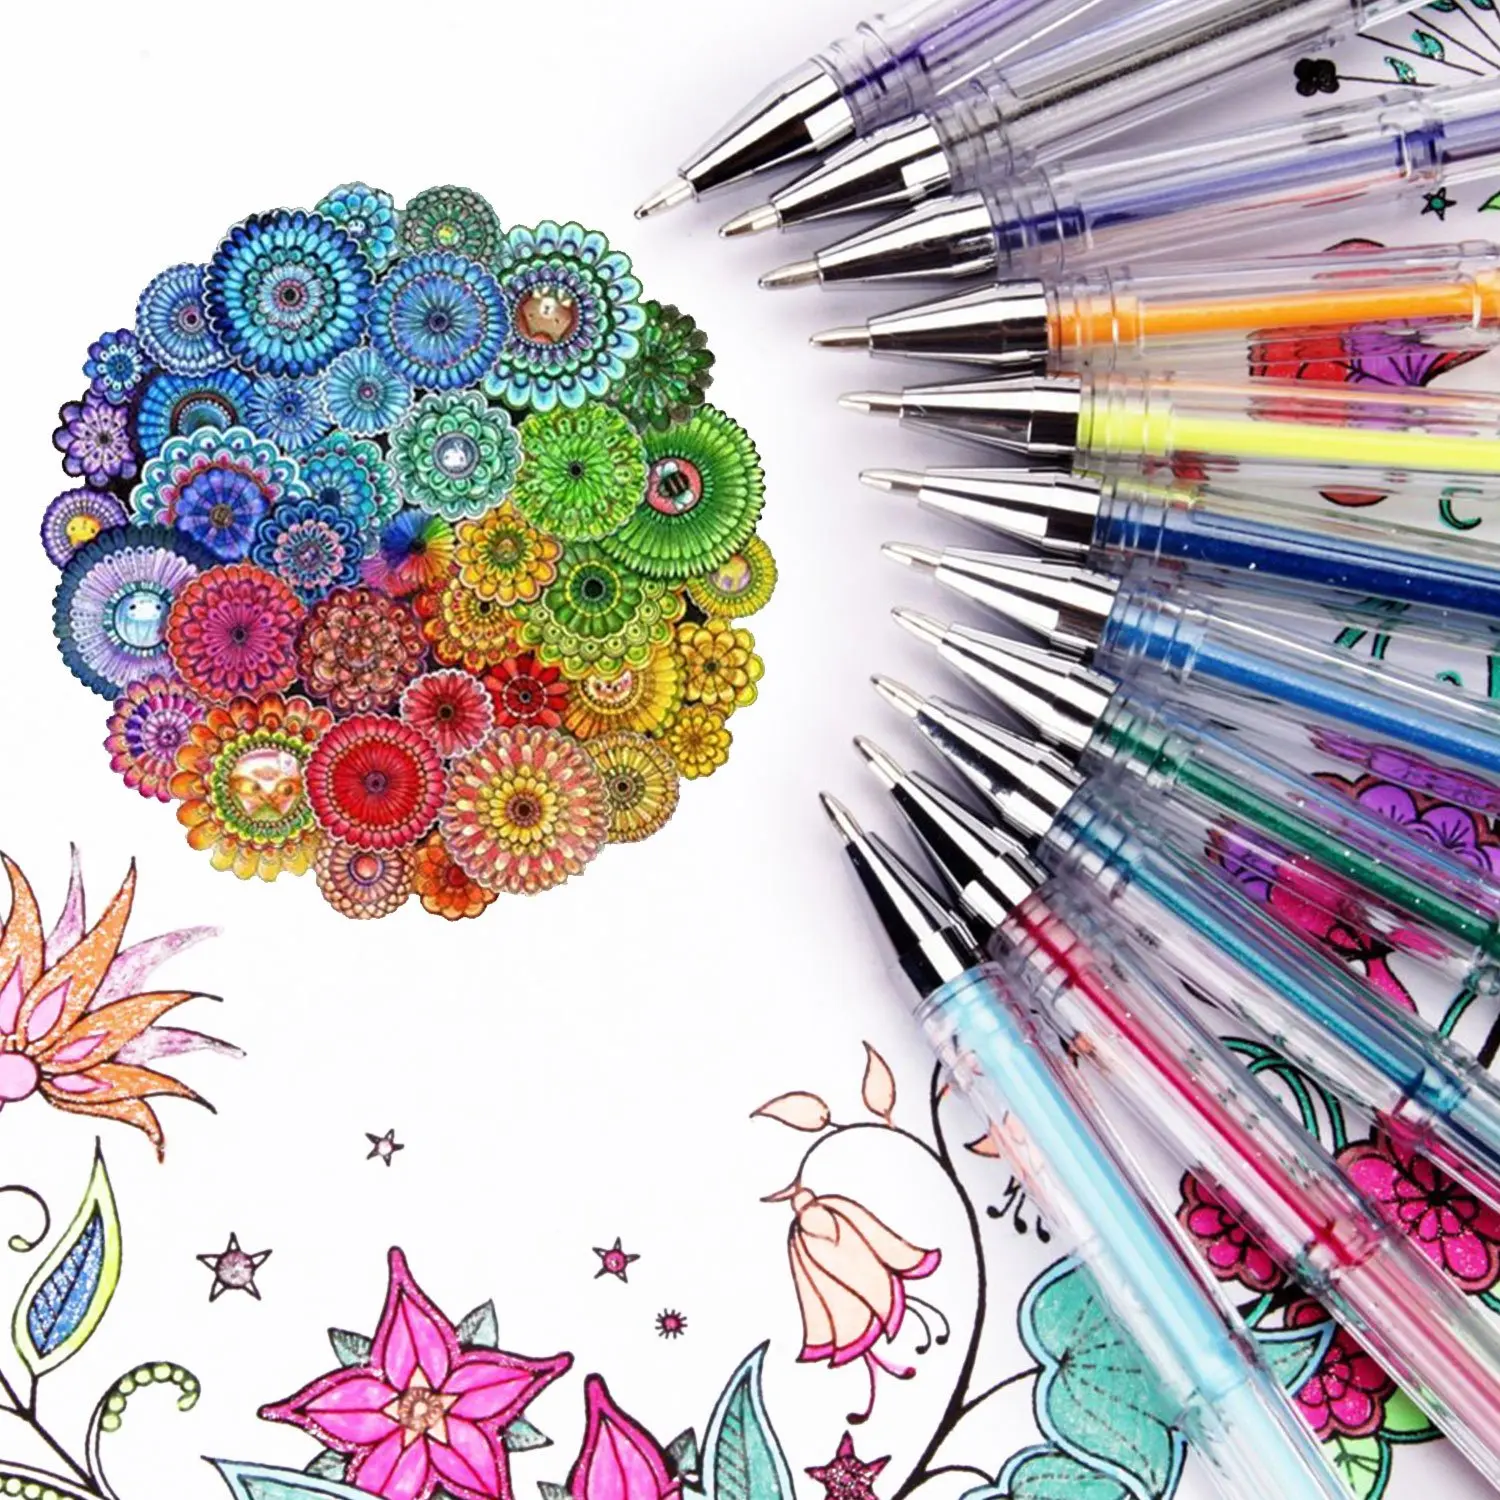 Umitive 48/60/100 Pcs Gel Pens Set Glitter Metallic Gel Sketching Drawing Color Pen School Office Stationary Supplies